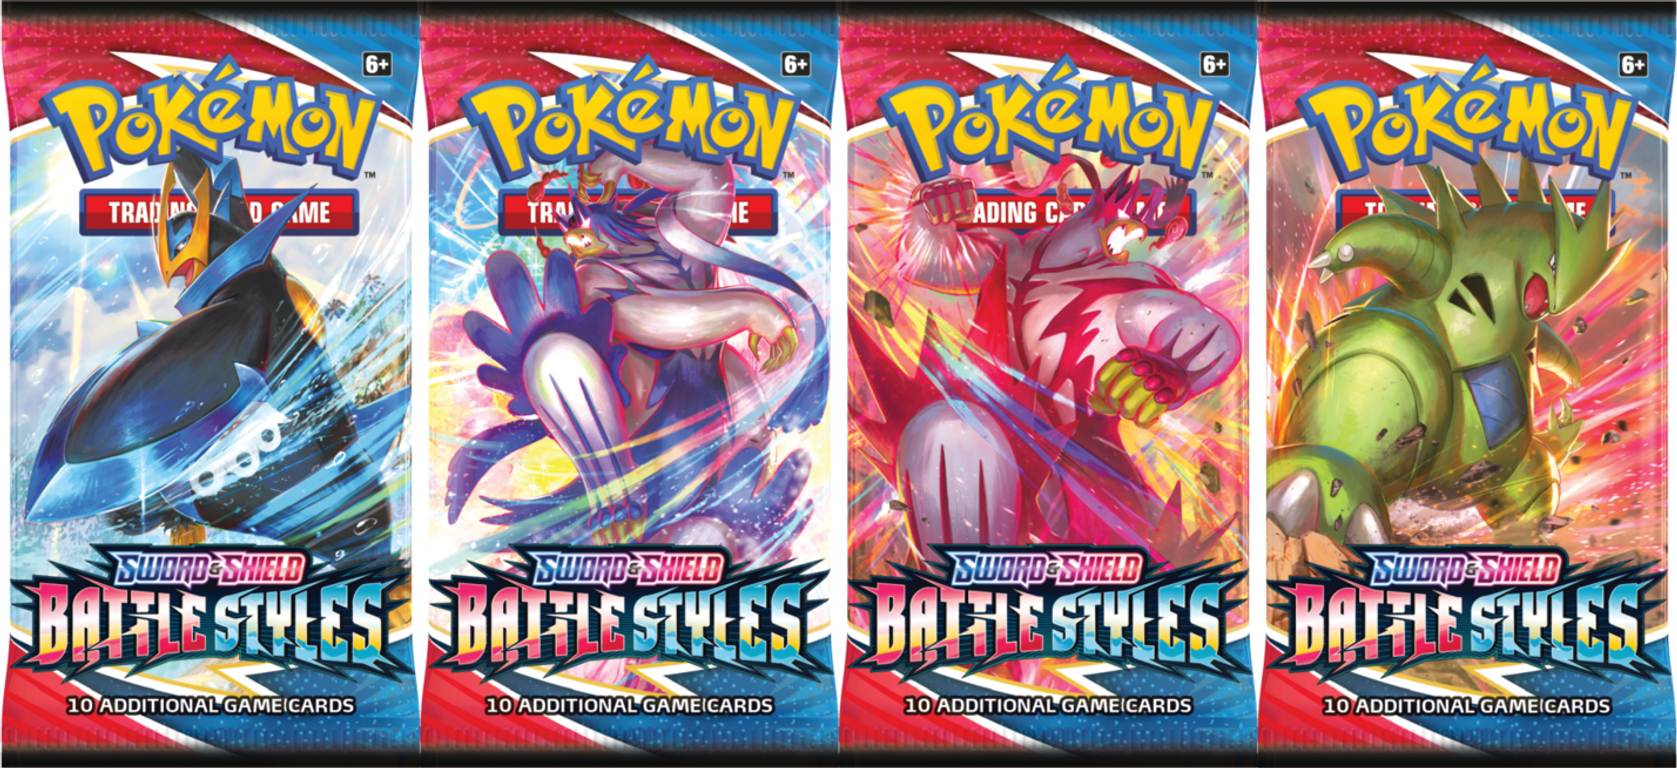 Pokémon TCG: Sword & Shield - Battle Styles Booster Pack boîte